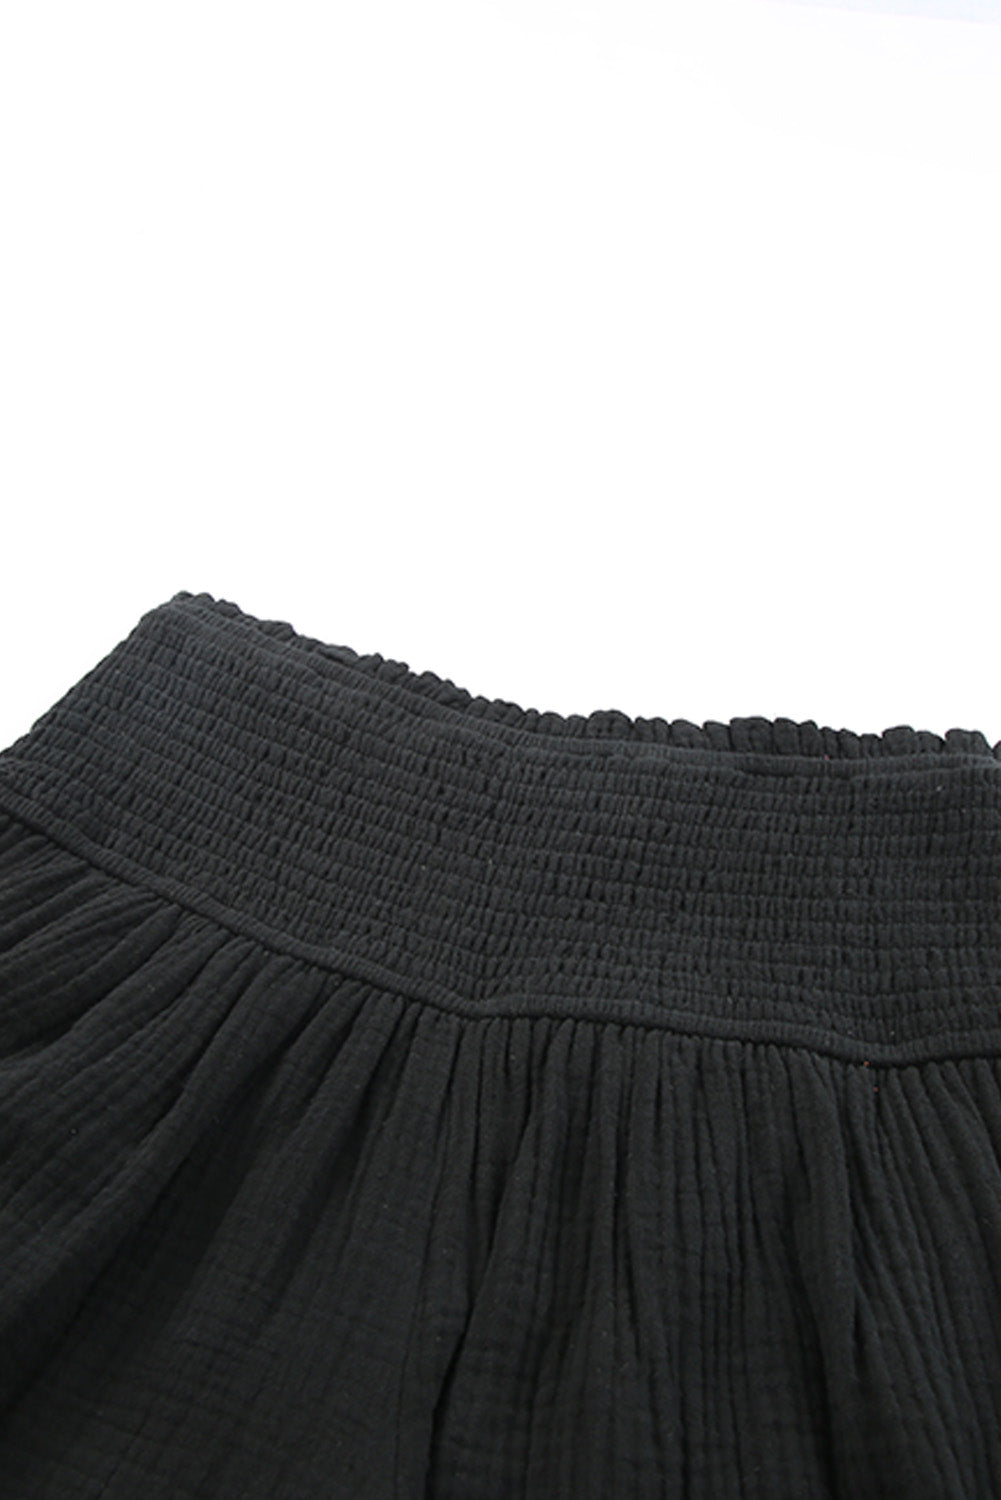 Black Smocked High Waist Ruffle Shorts Casual Shorts JT's Designer Fashion